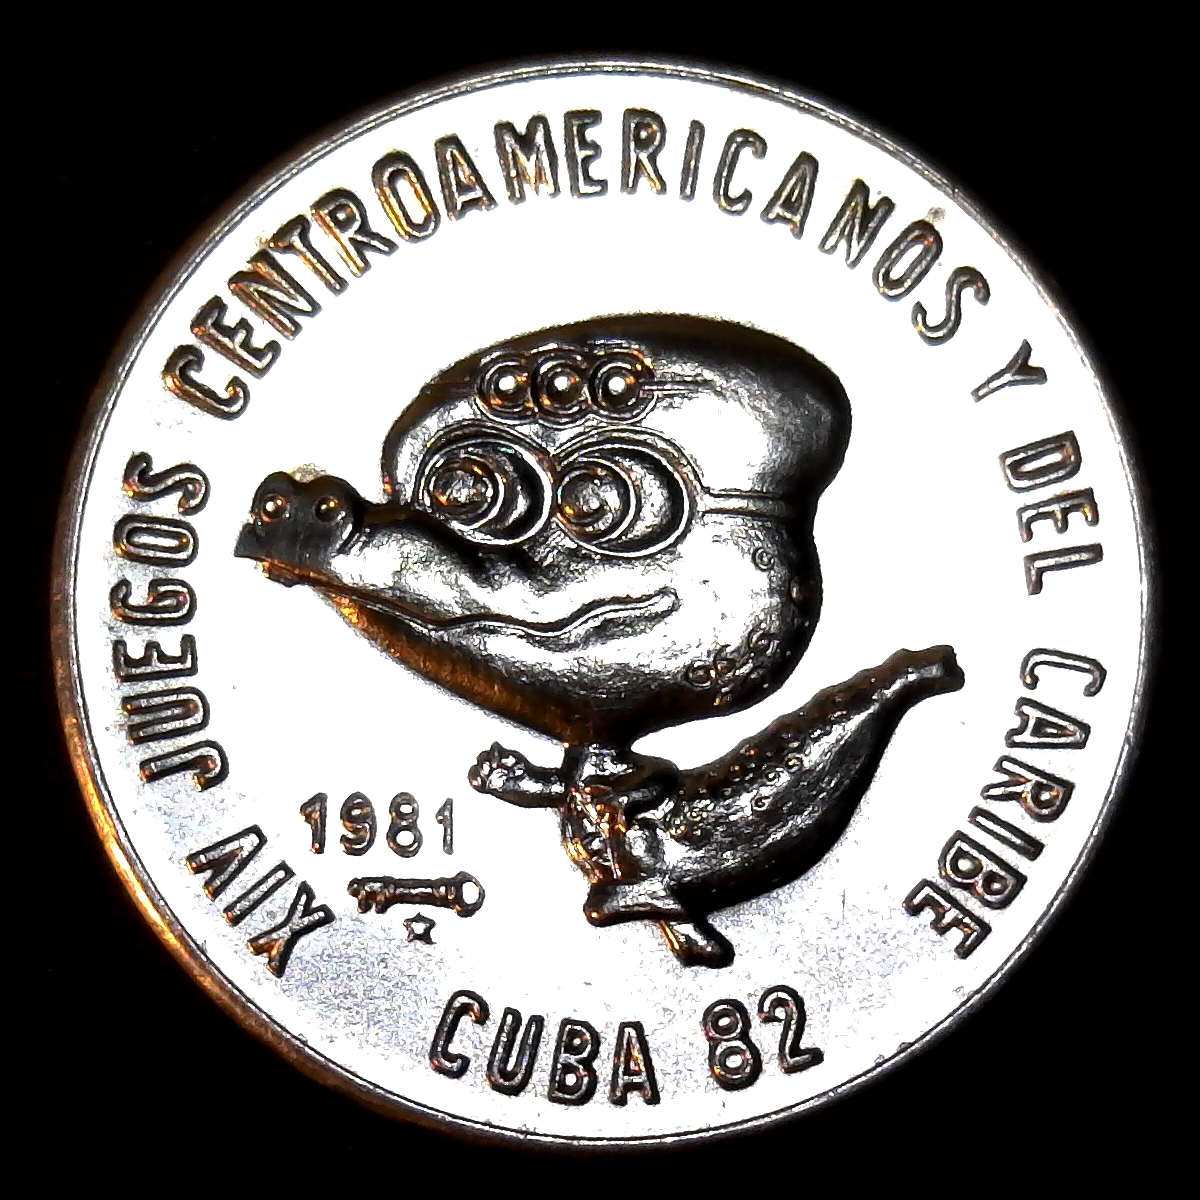 Cuba 1 Peso Alligator 1981 obverse.jpg